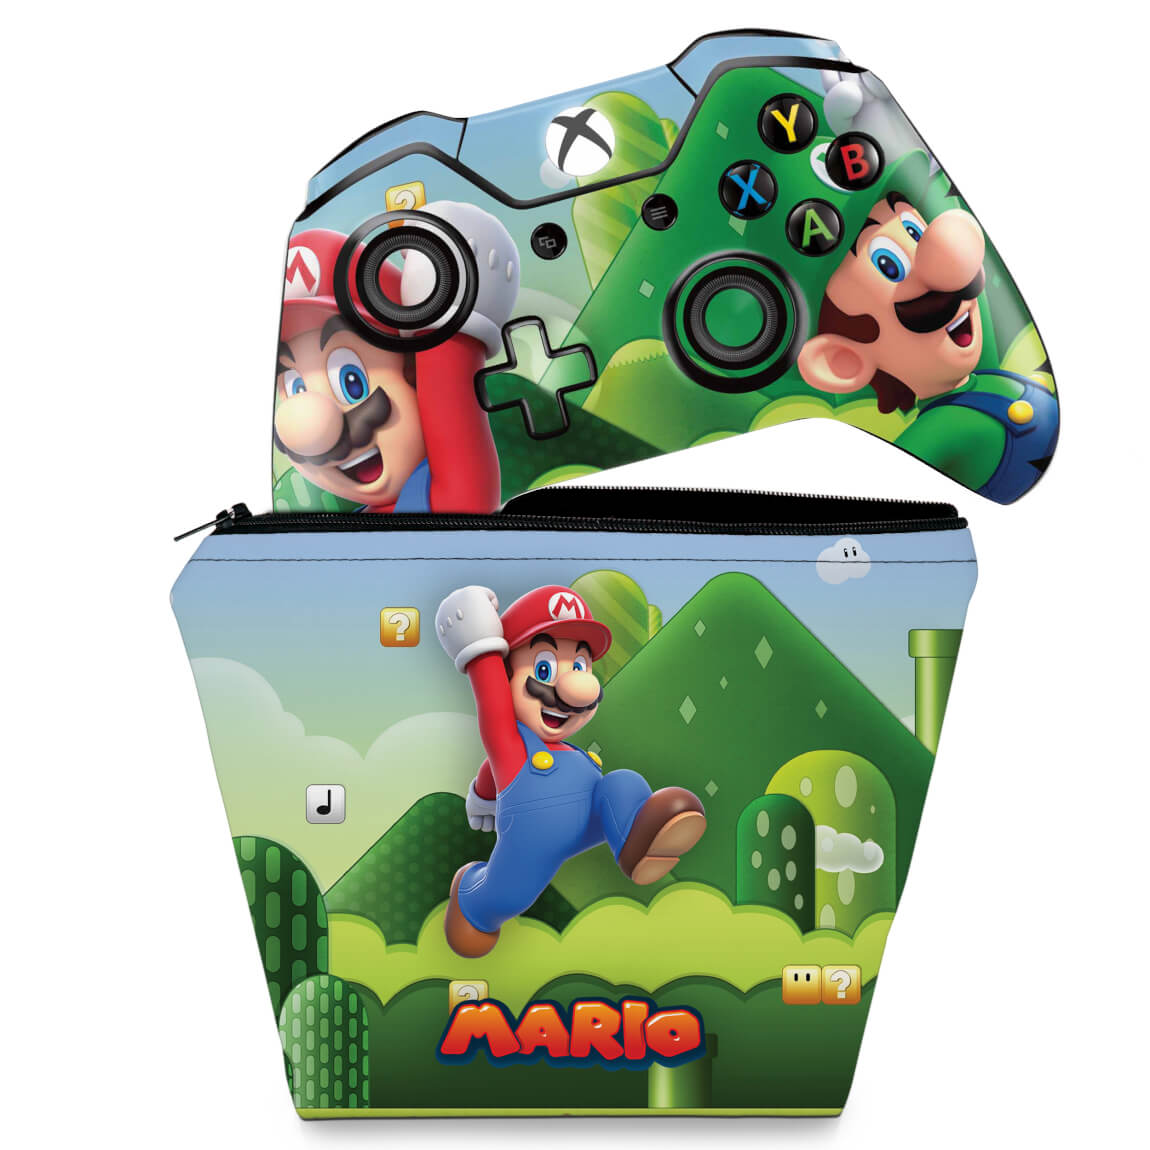 Xbox 360 Super Slim Capa Anti Poeira - Super Mario Bros. - Pop Arte Skins  Atacado